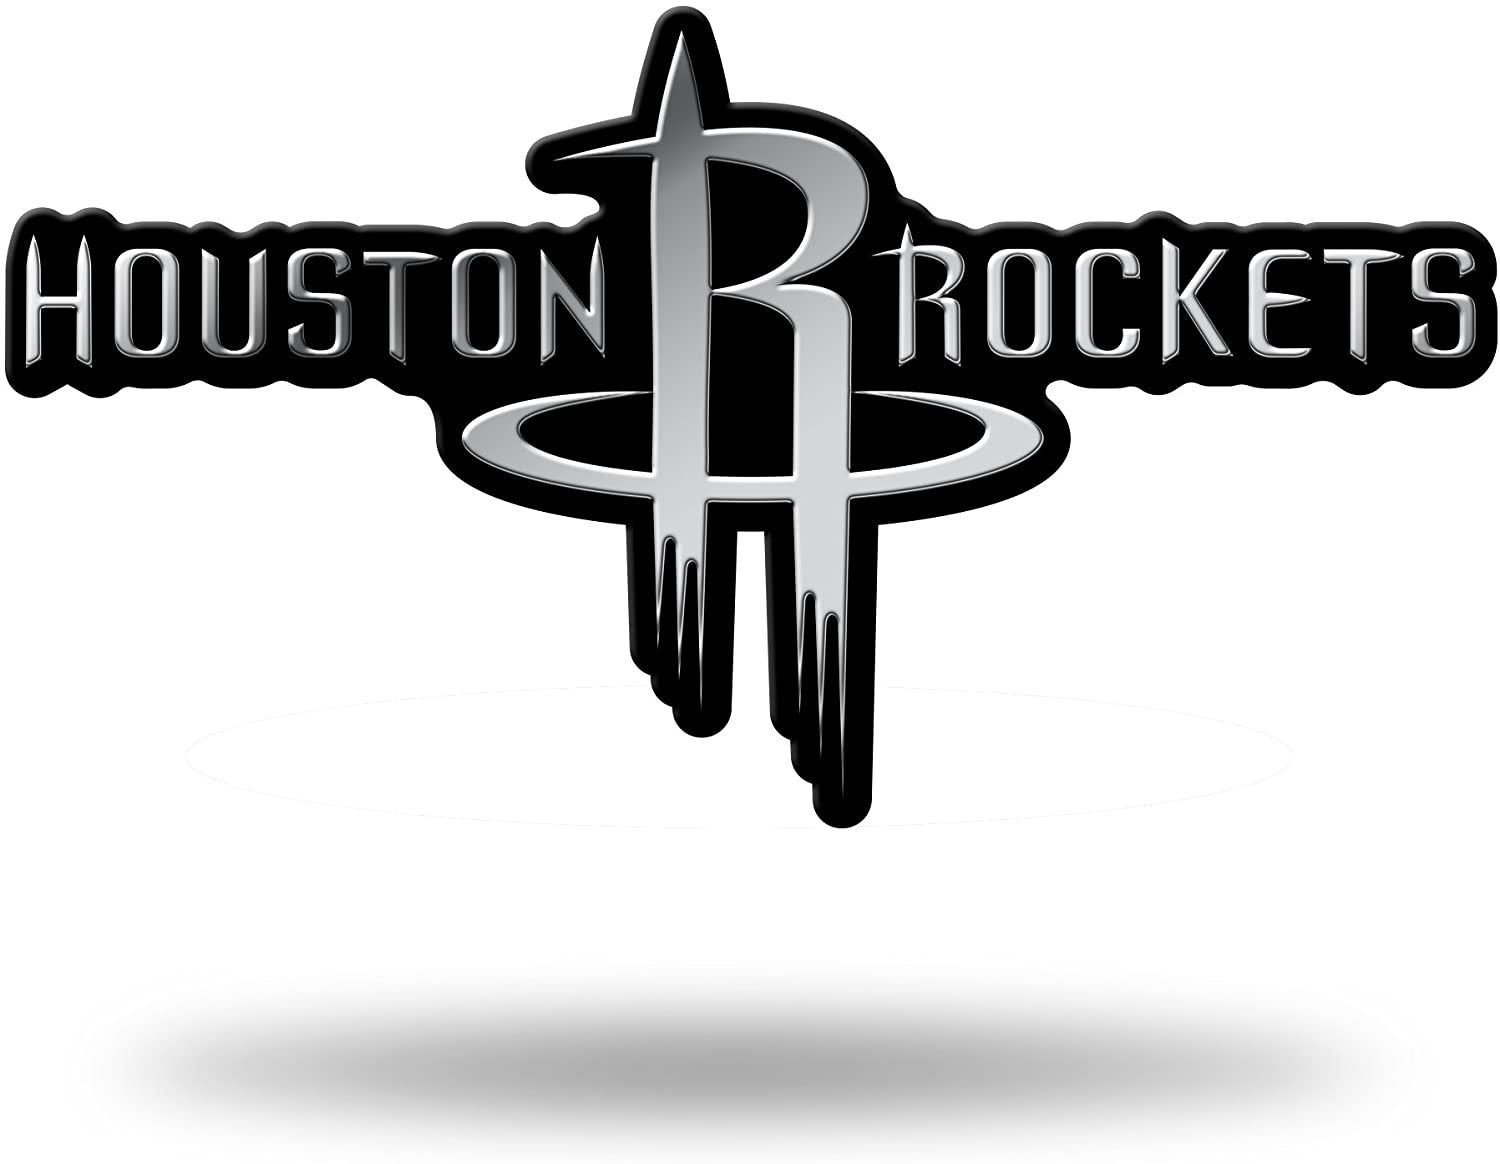 Houston Rockets Silver Chrome Color Auto Emblem, Raised Molded Plastic, 3.5 Inch, Adhesive Tape Backing